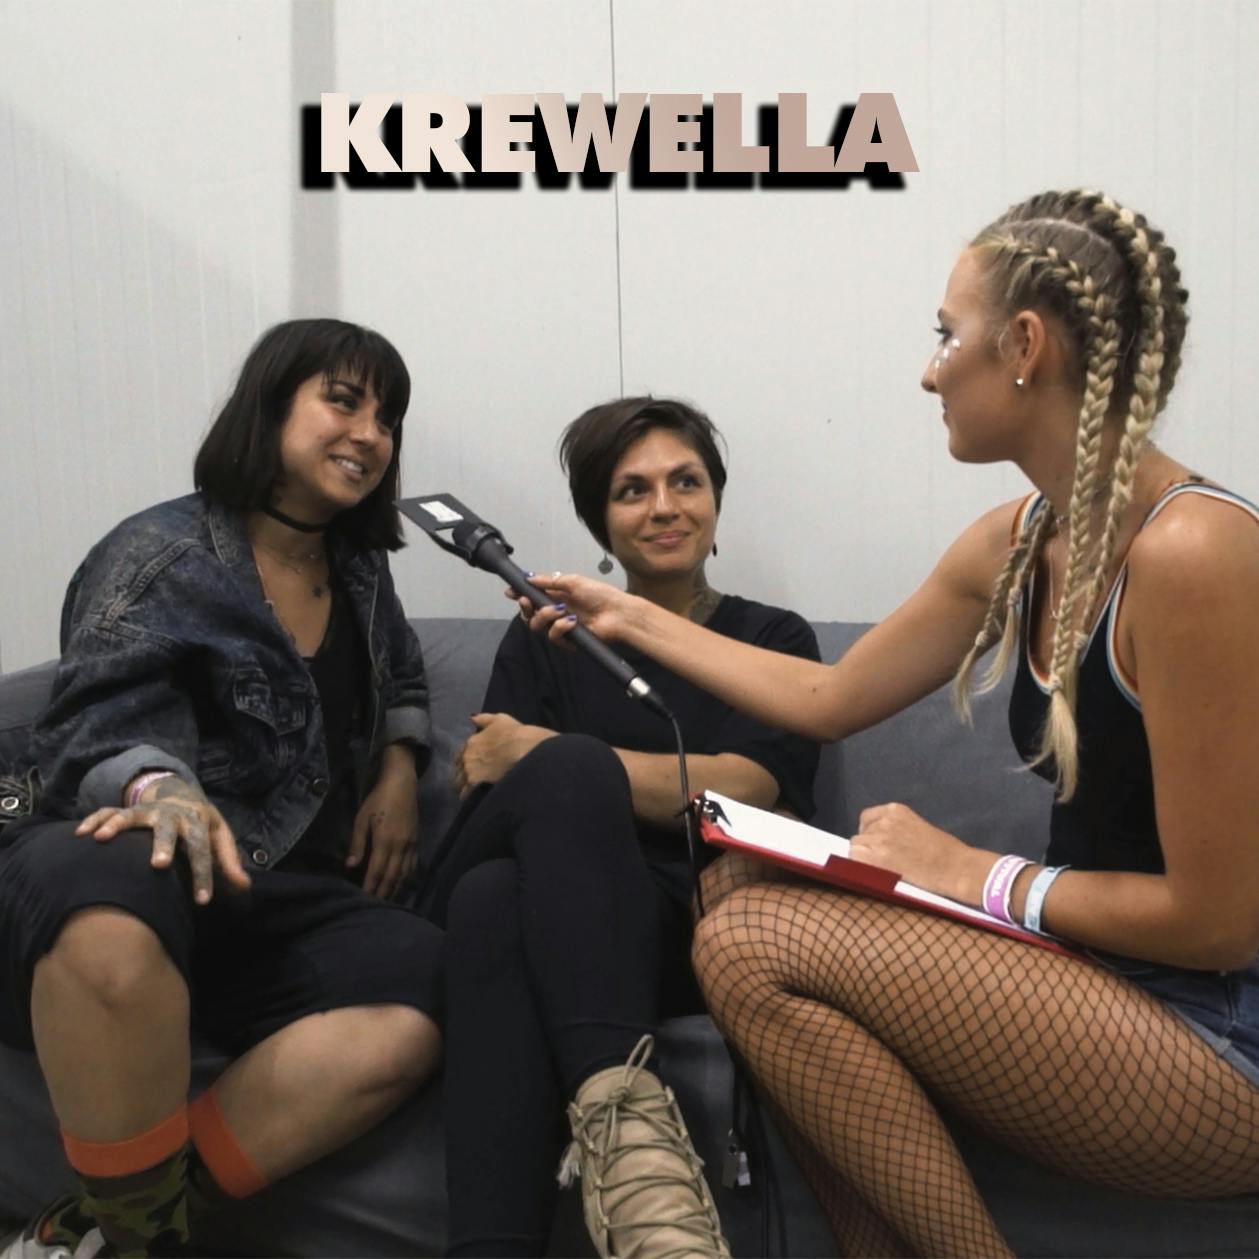 who is krewella